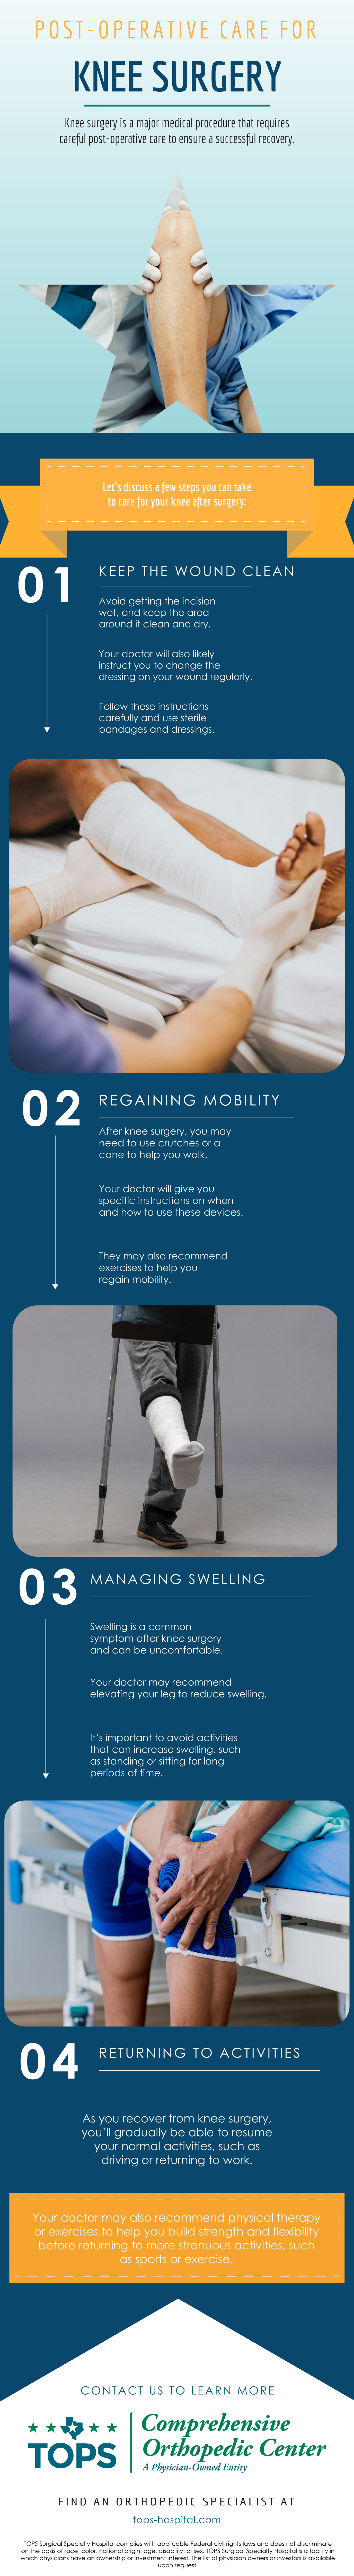 infographic of knee surgery precautions